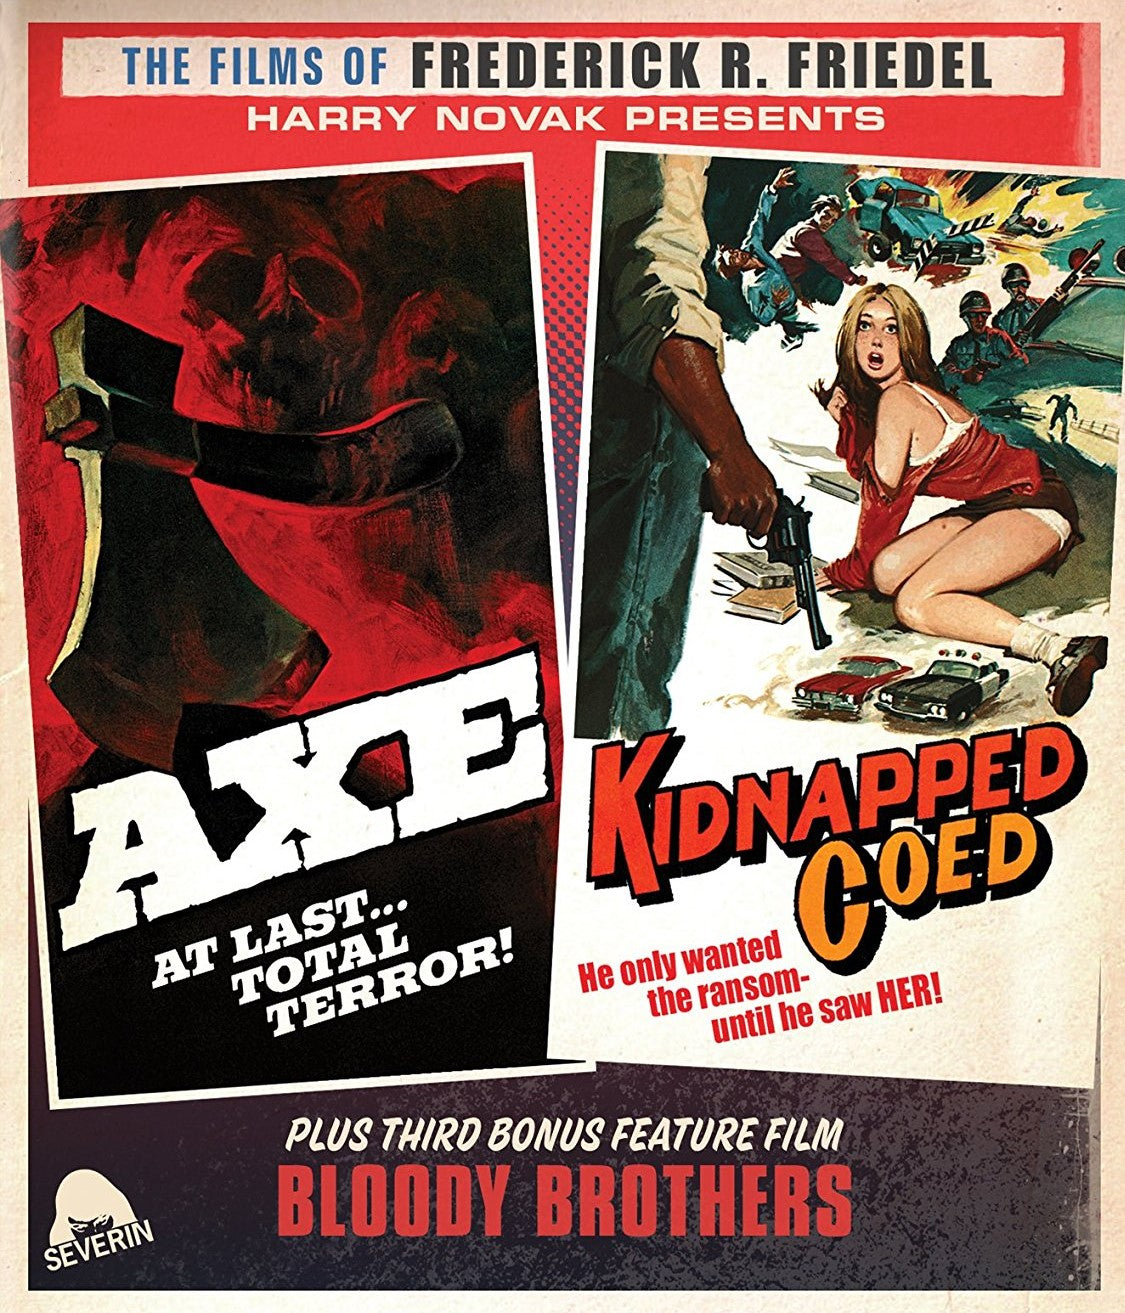 Axe / Kidnapped Coed Blu-Ray/cd Blu-Ray